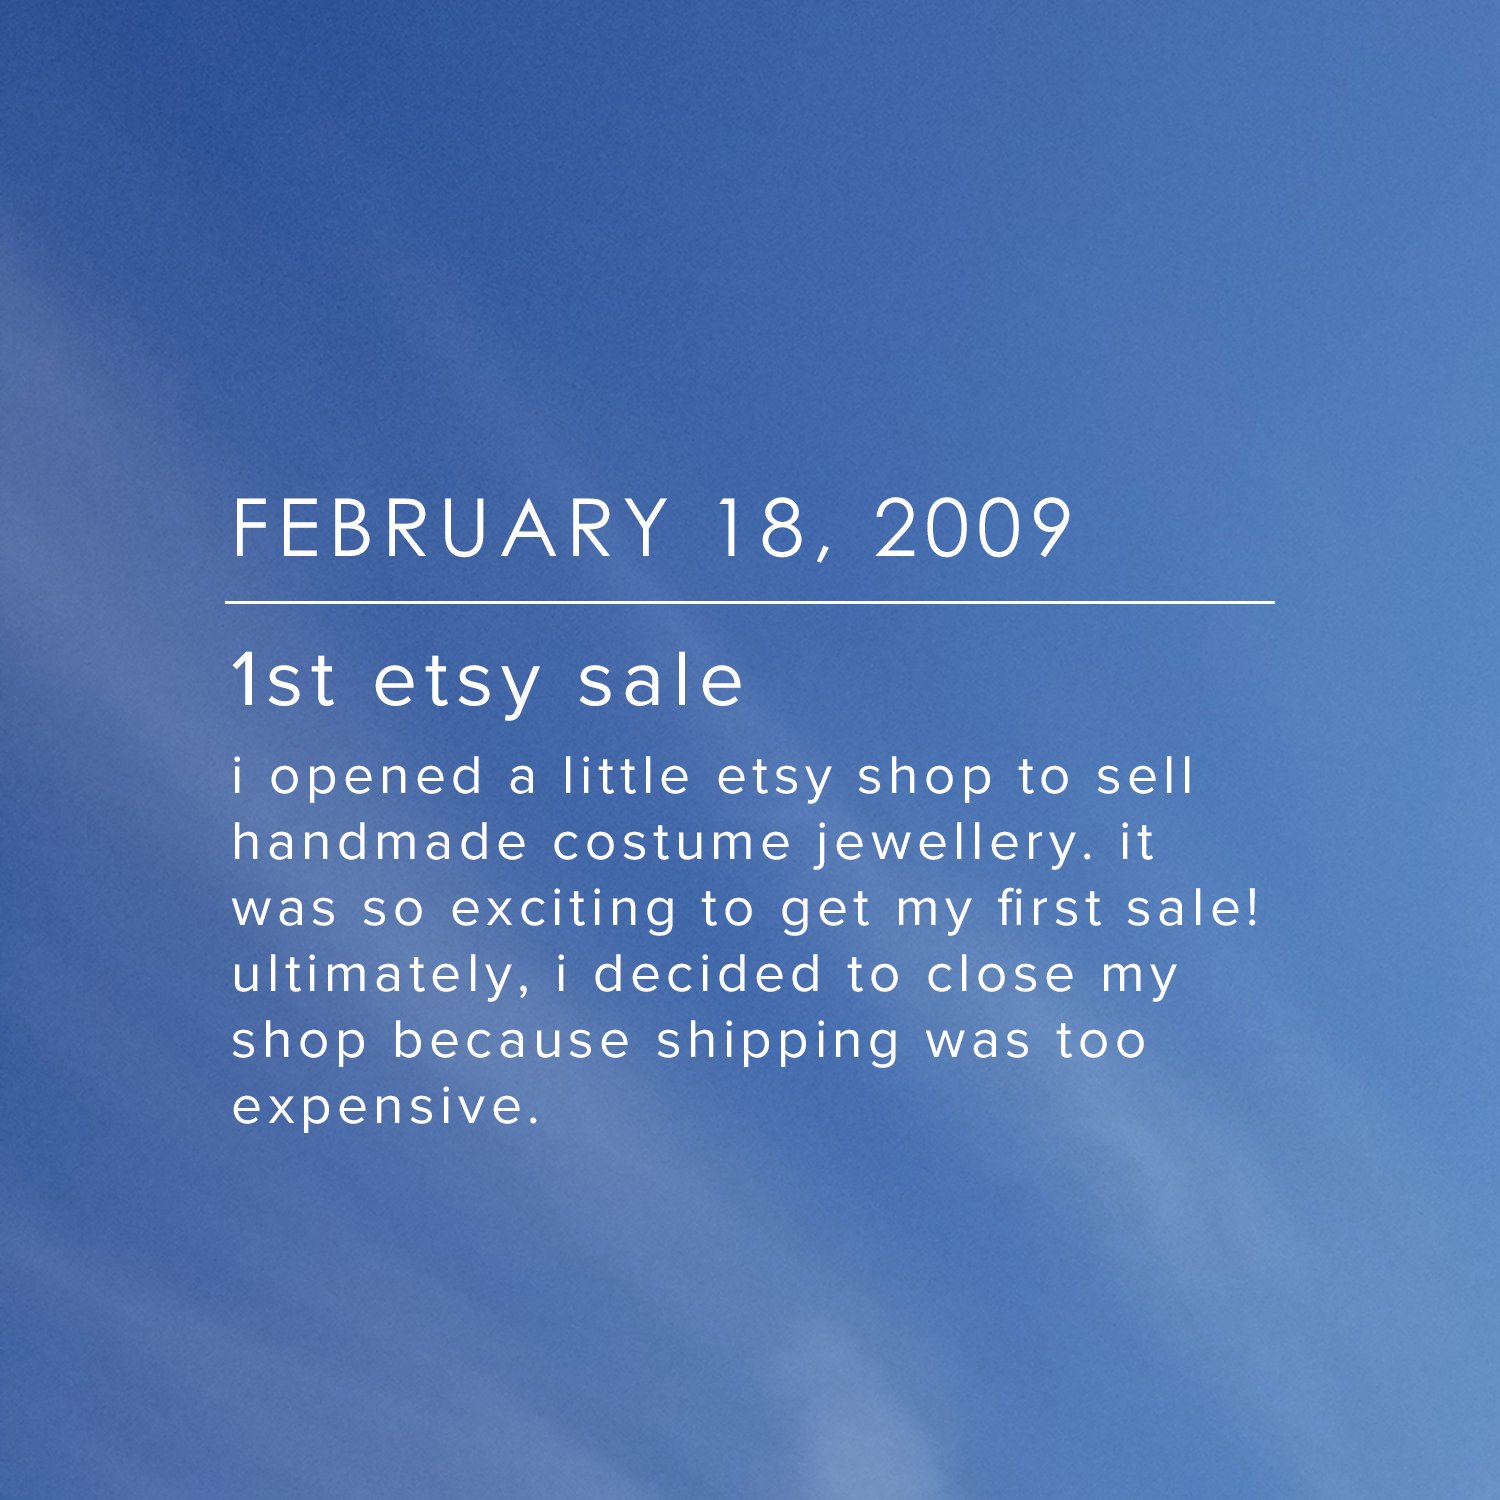 February 18, 2009 - 1st etsy sale